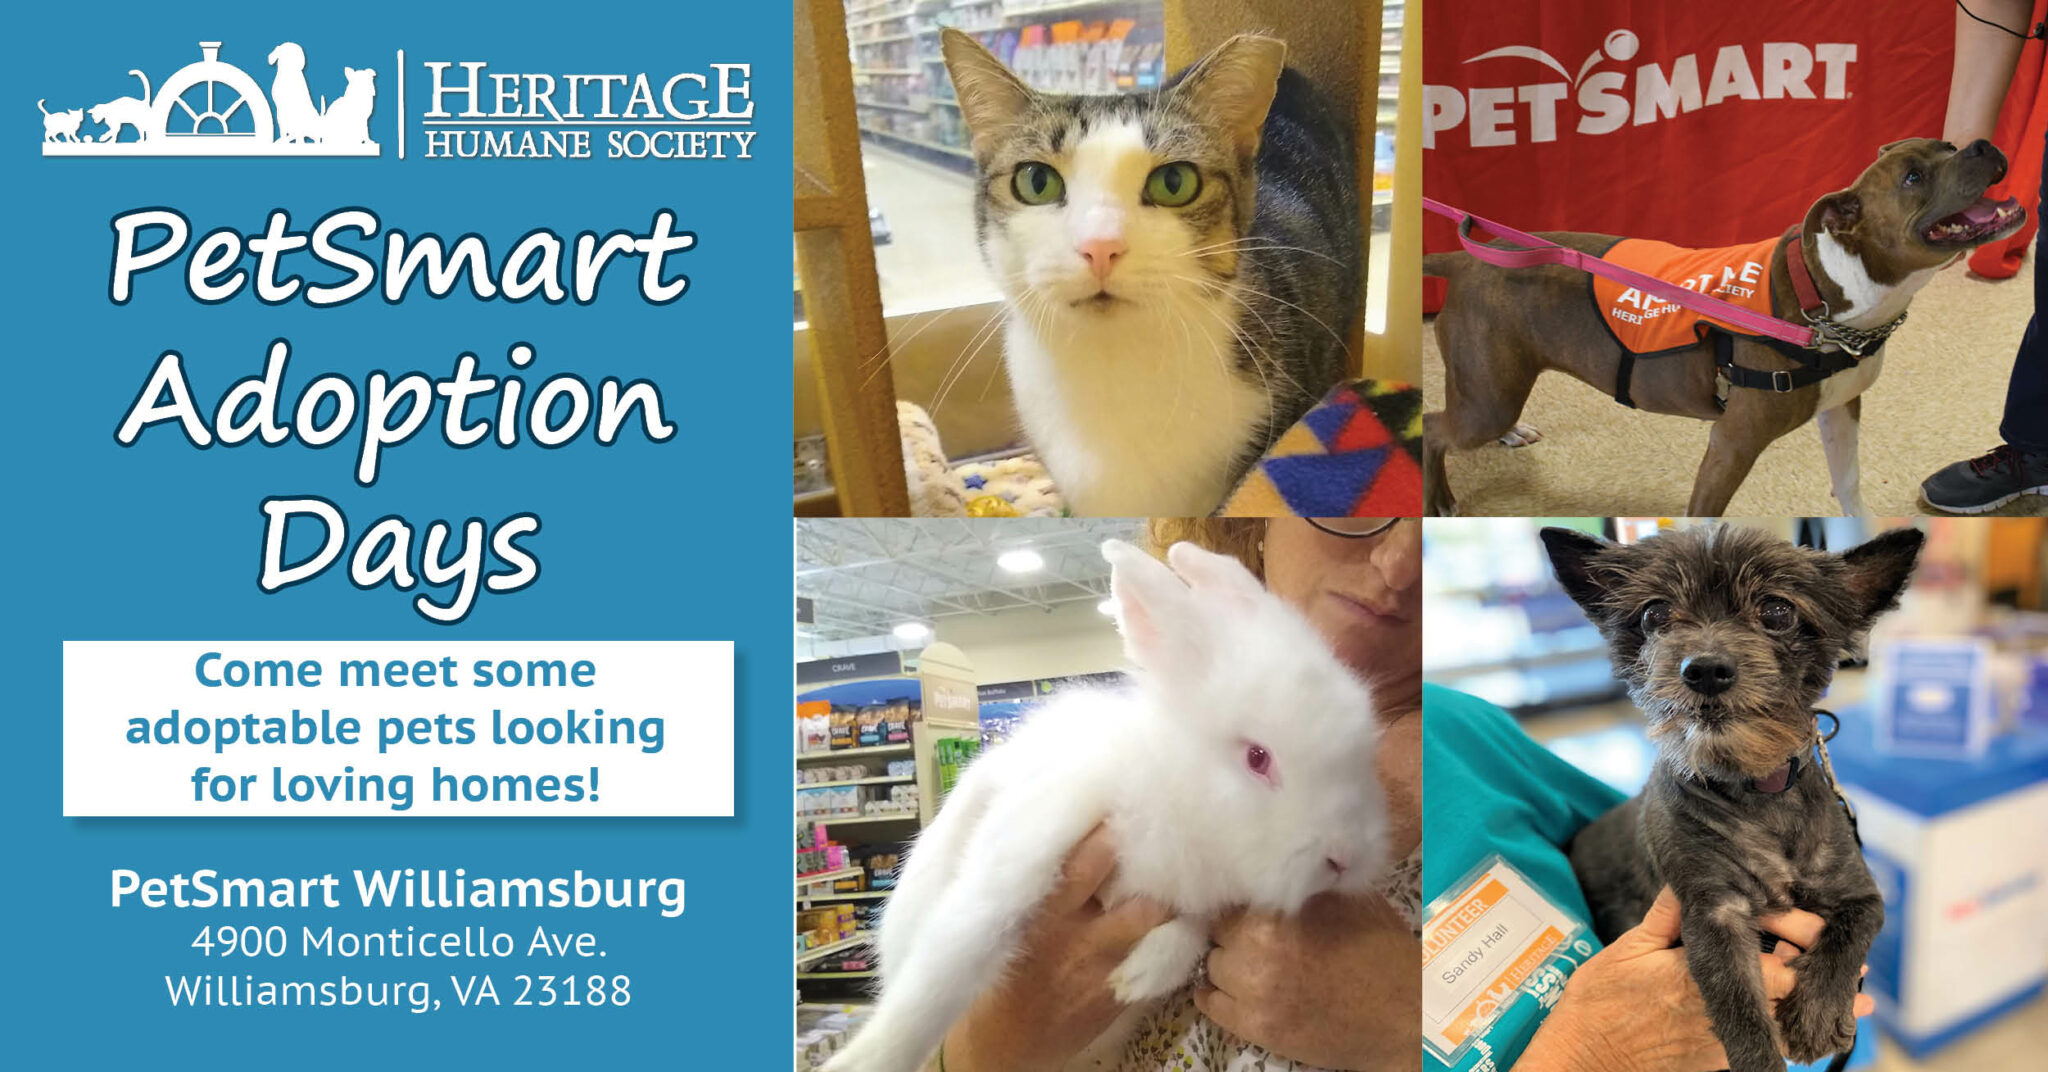 PetSmart Adoption Day! Heritage Humane